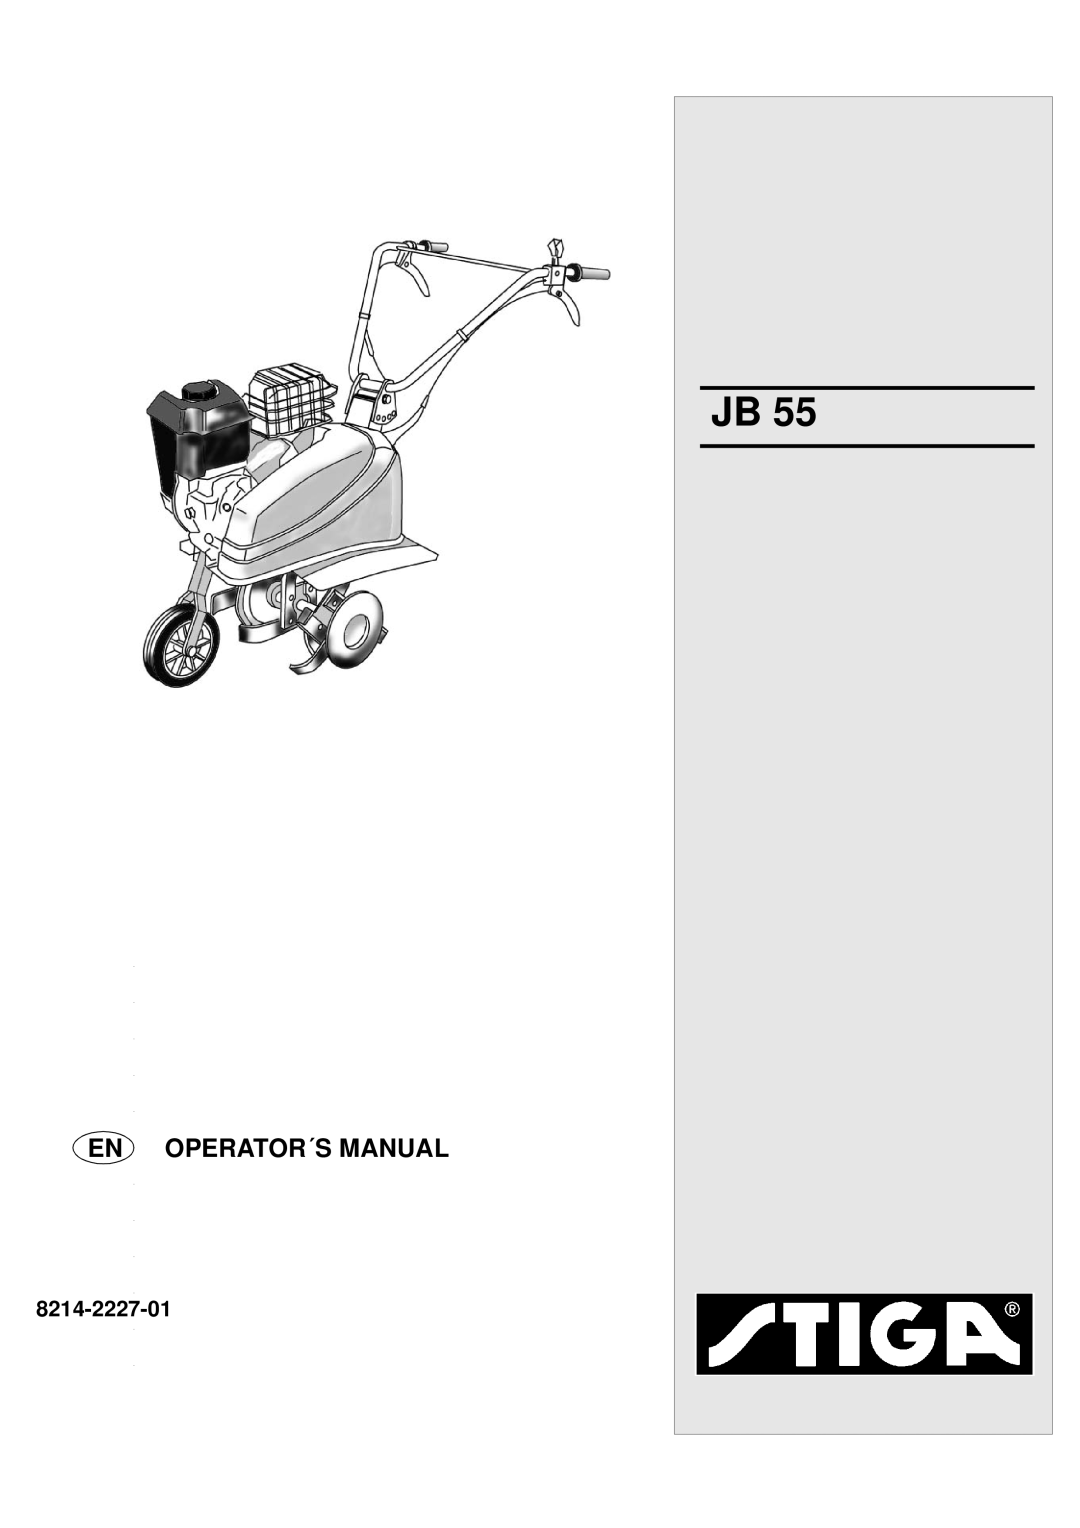 Stiga JB 55 manual 8214-2227-01, En Operator´S Manual, PL ,16758.&-½2%6¥8*, CS 1”92 